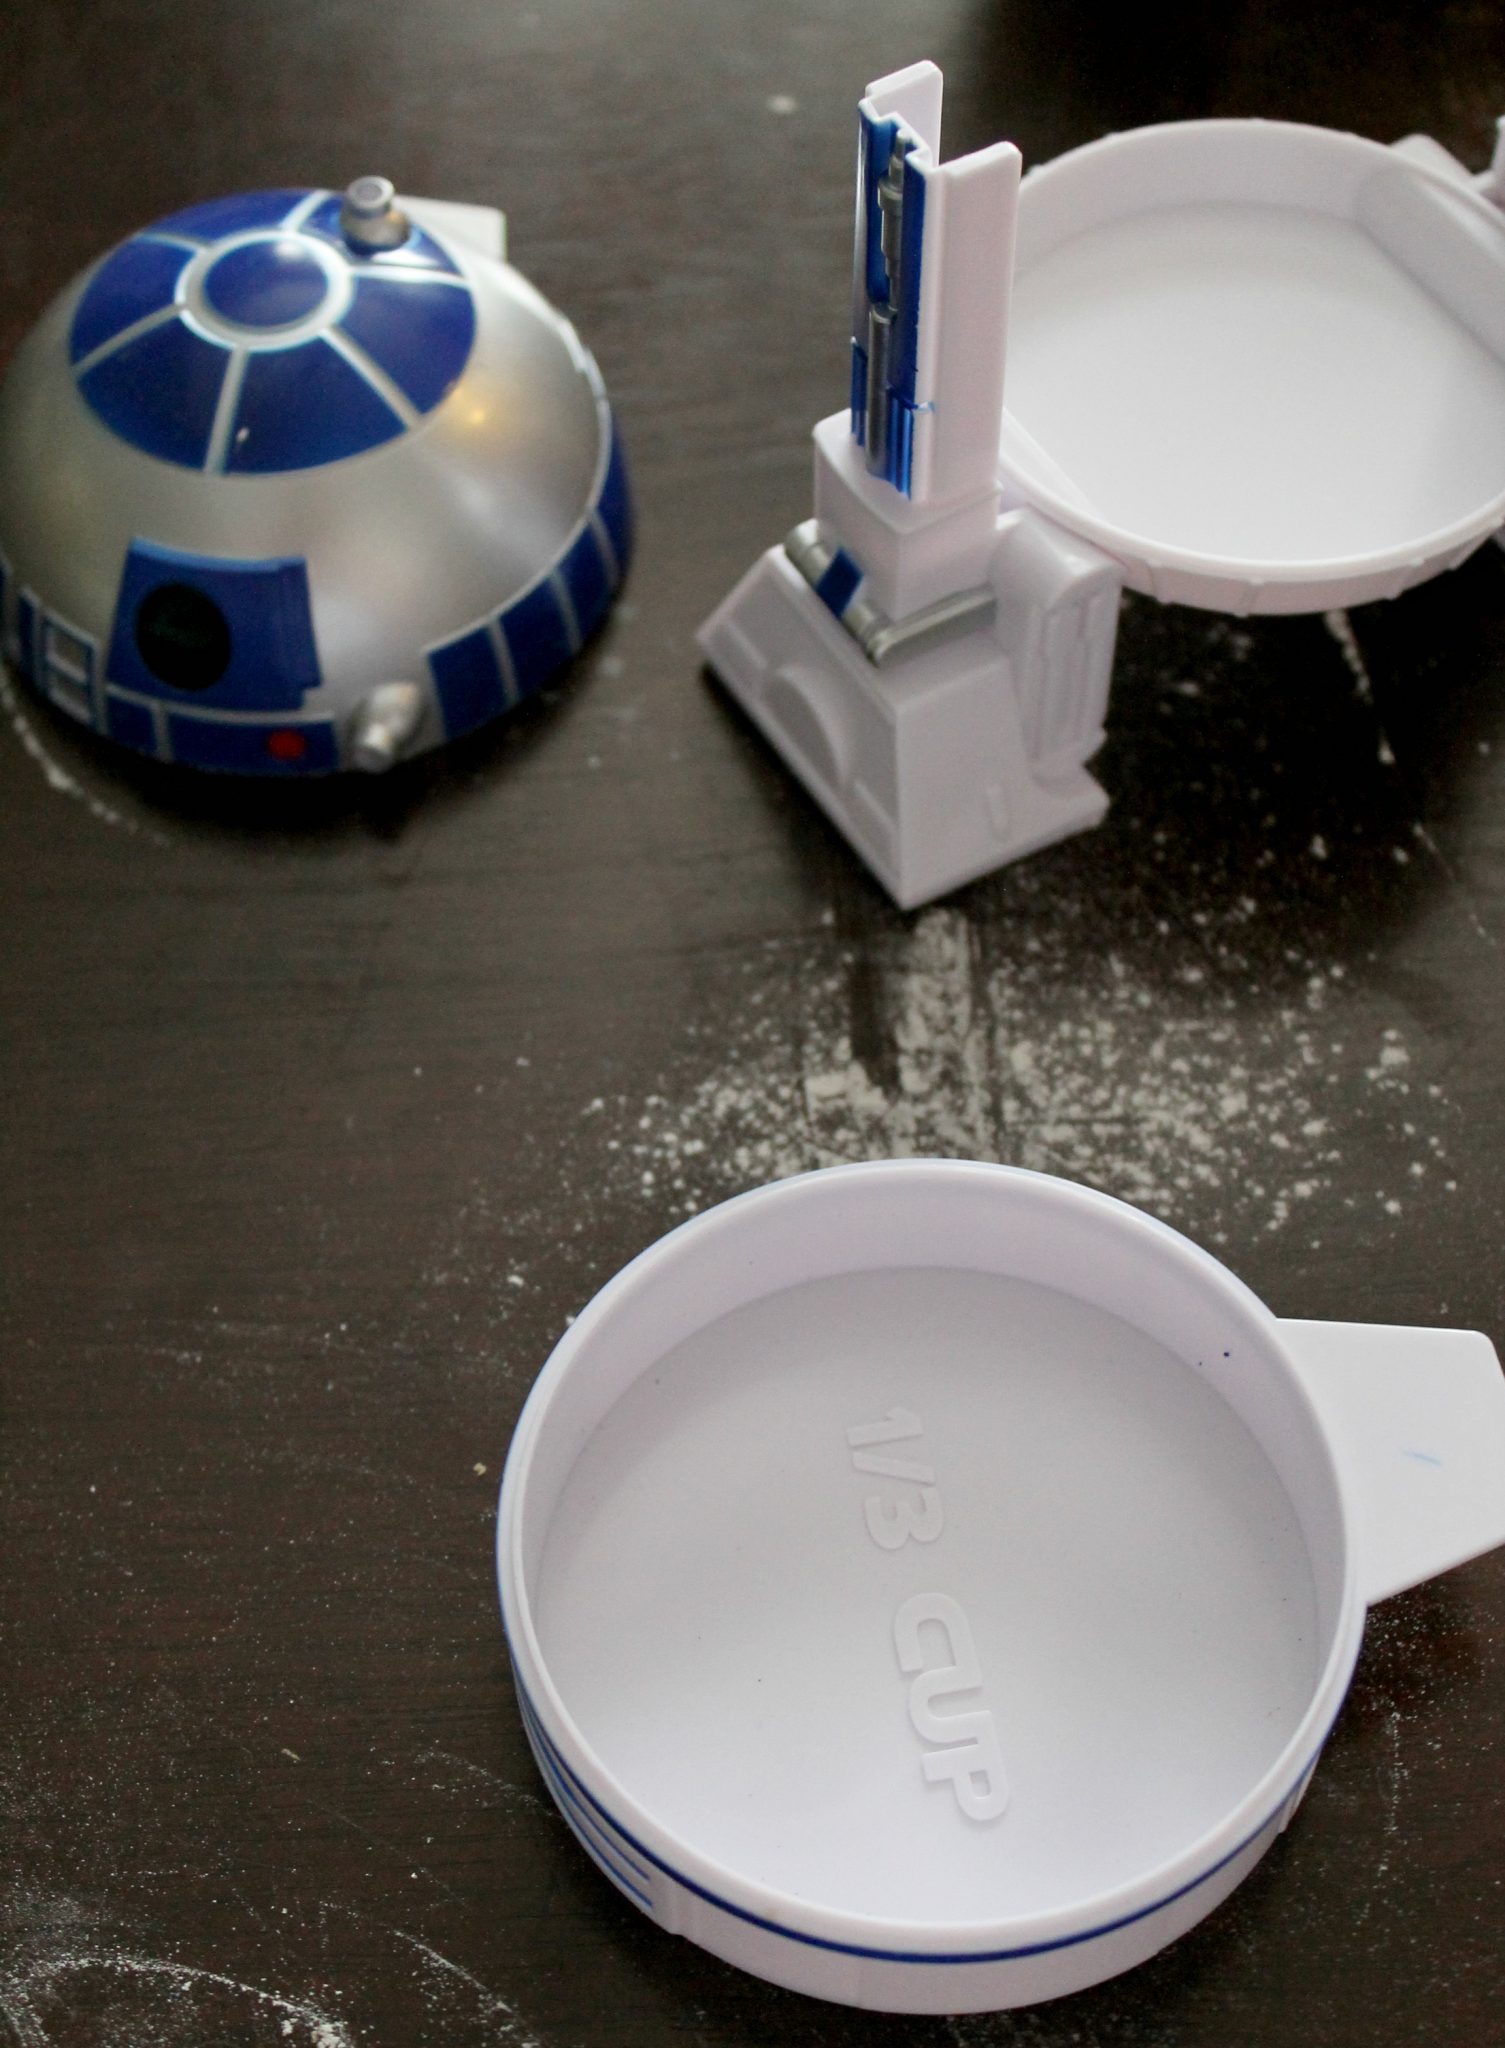 Star Wars Measuring Cups